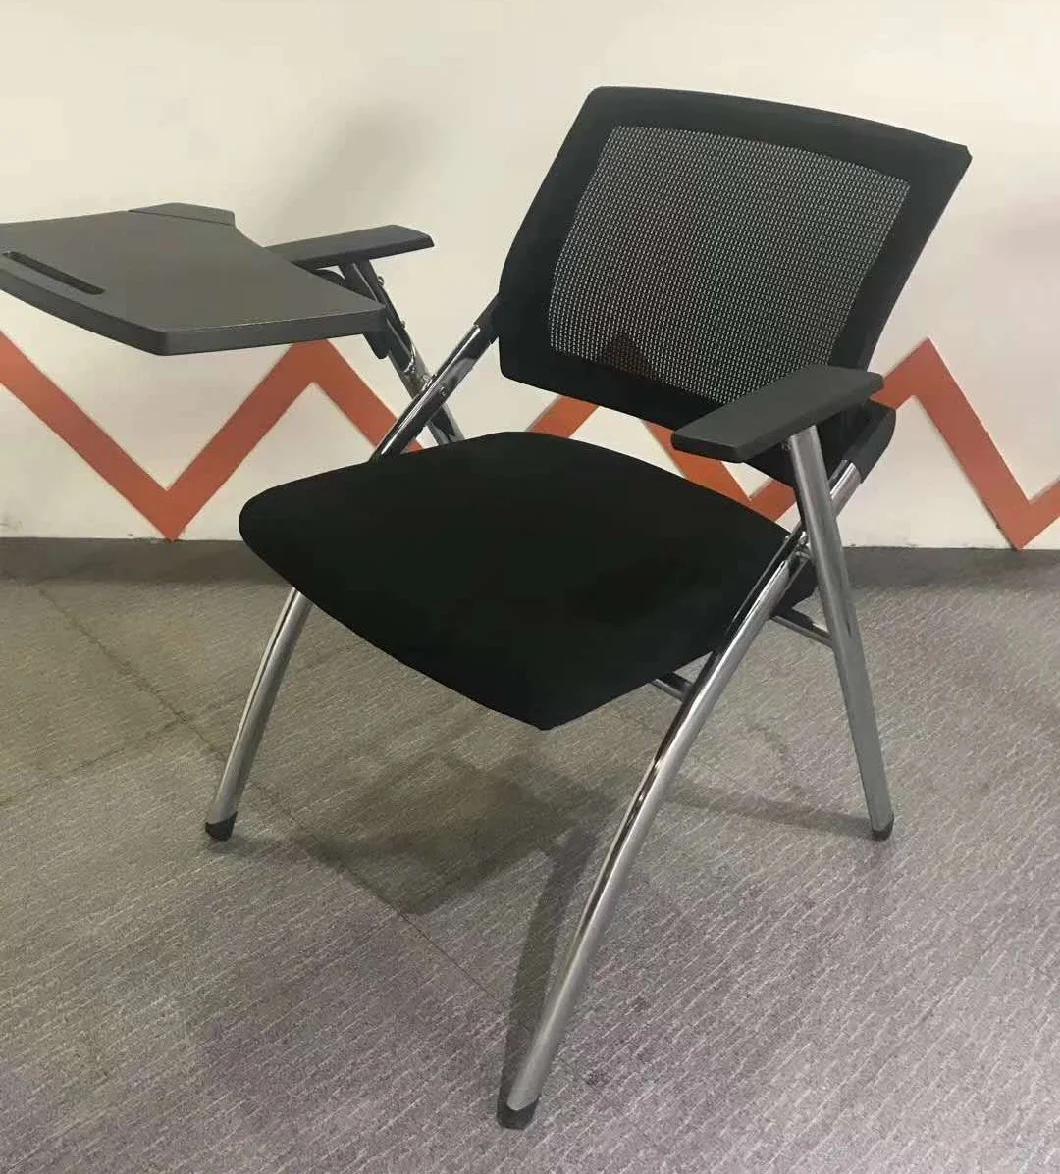 2021 Wholesale Chrome Steel Metal School Training Folding Mesh Chair with Writing Pad